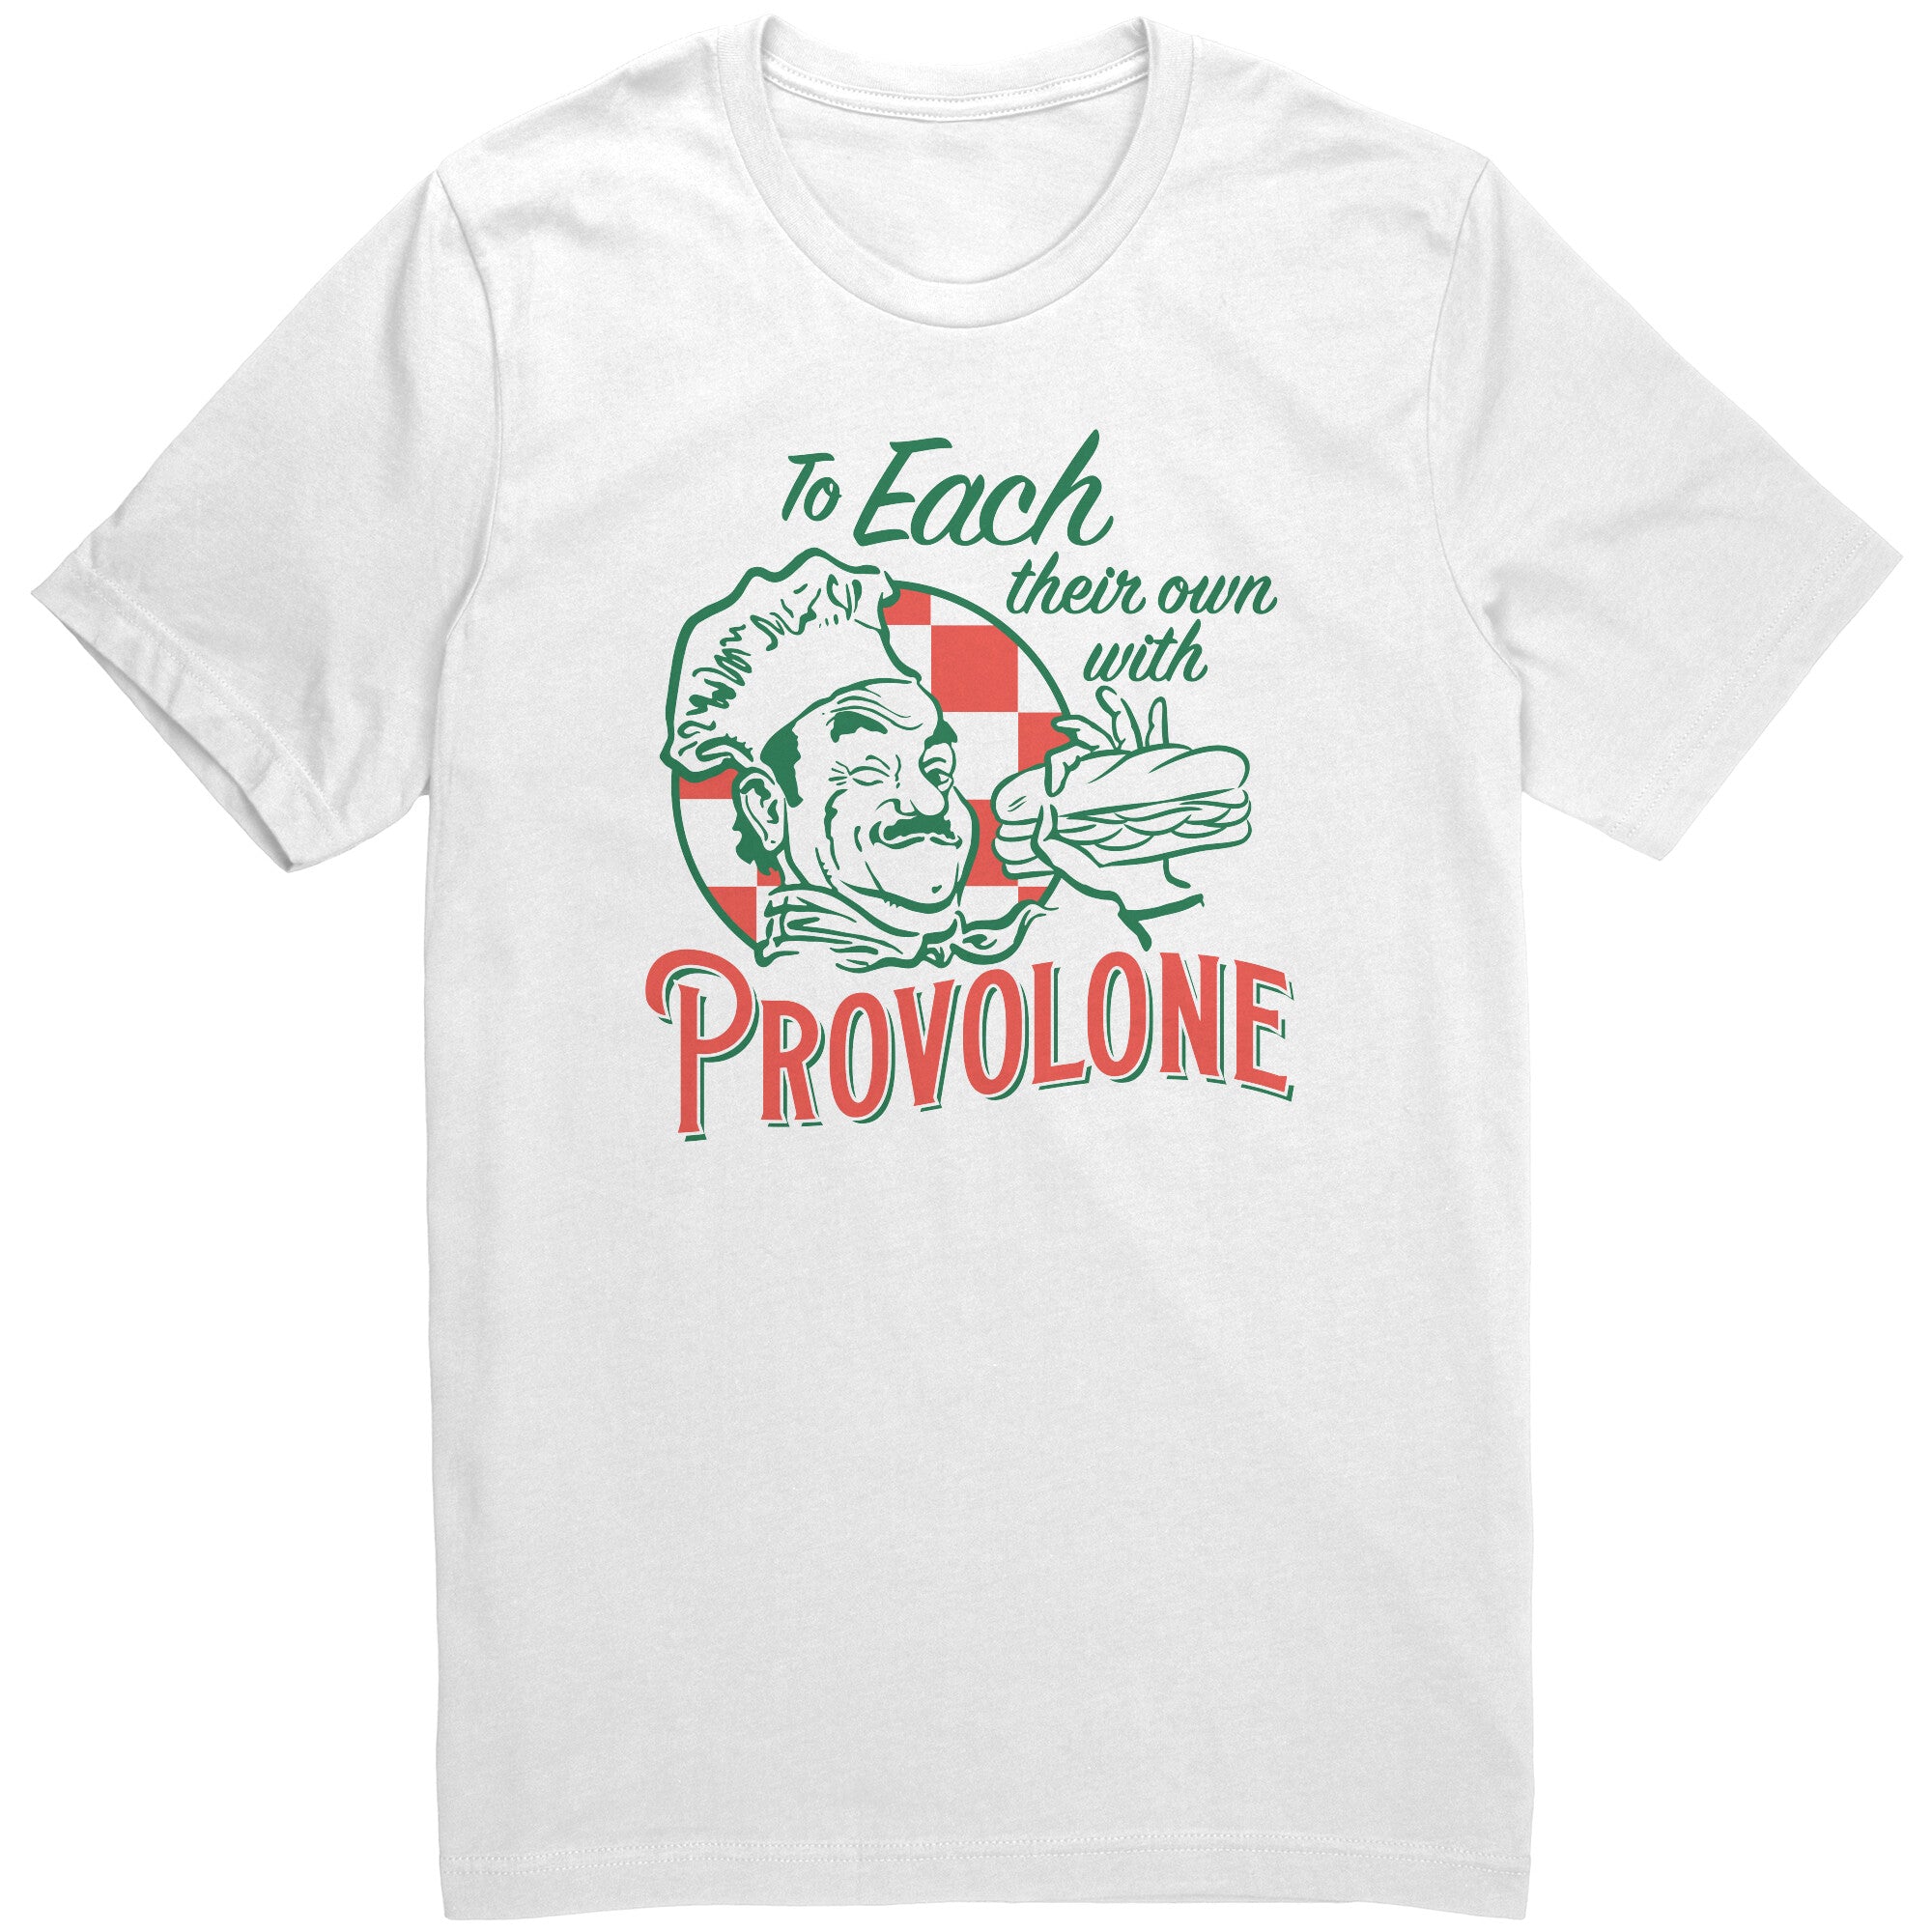 Provolone T-Shirt